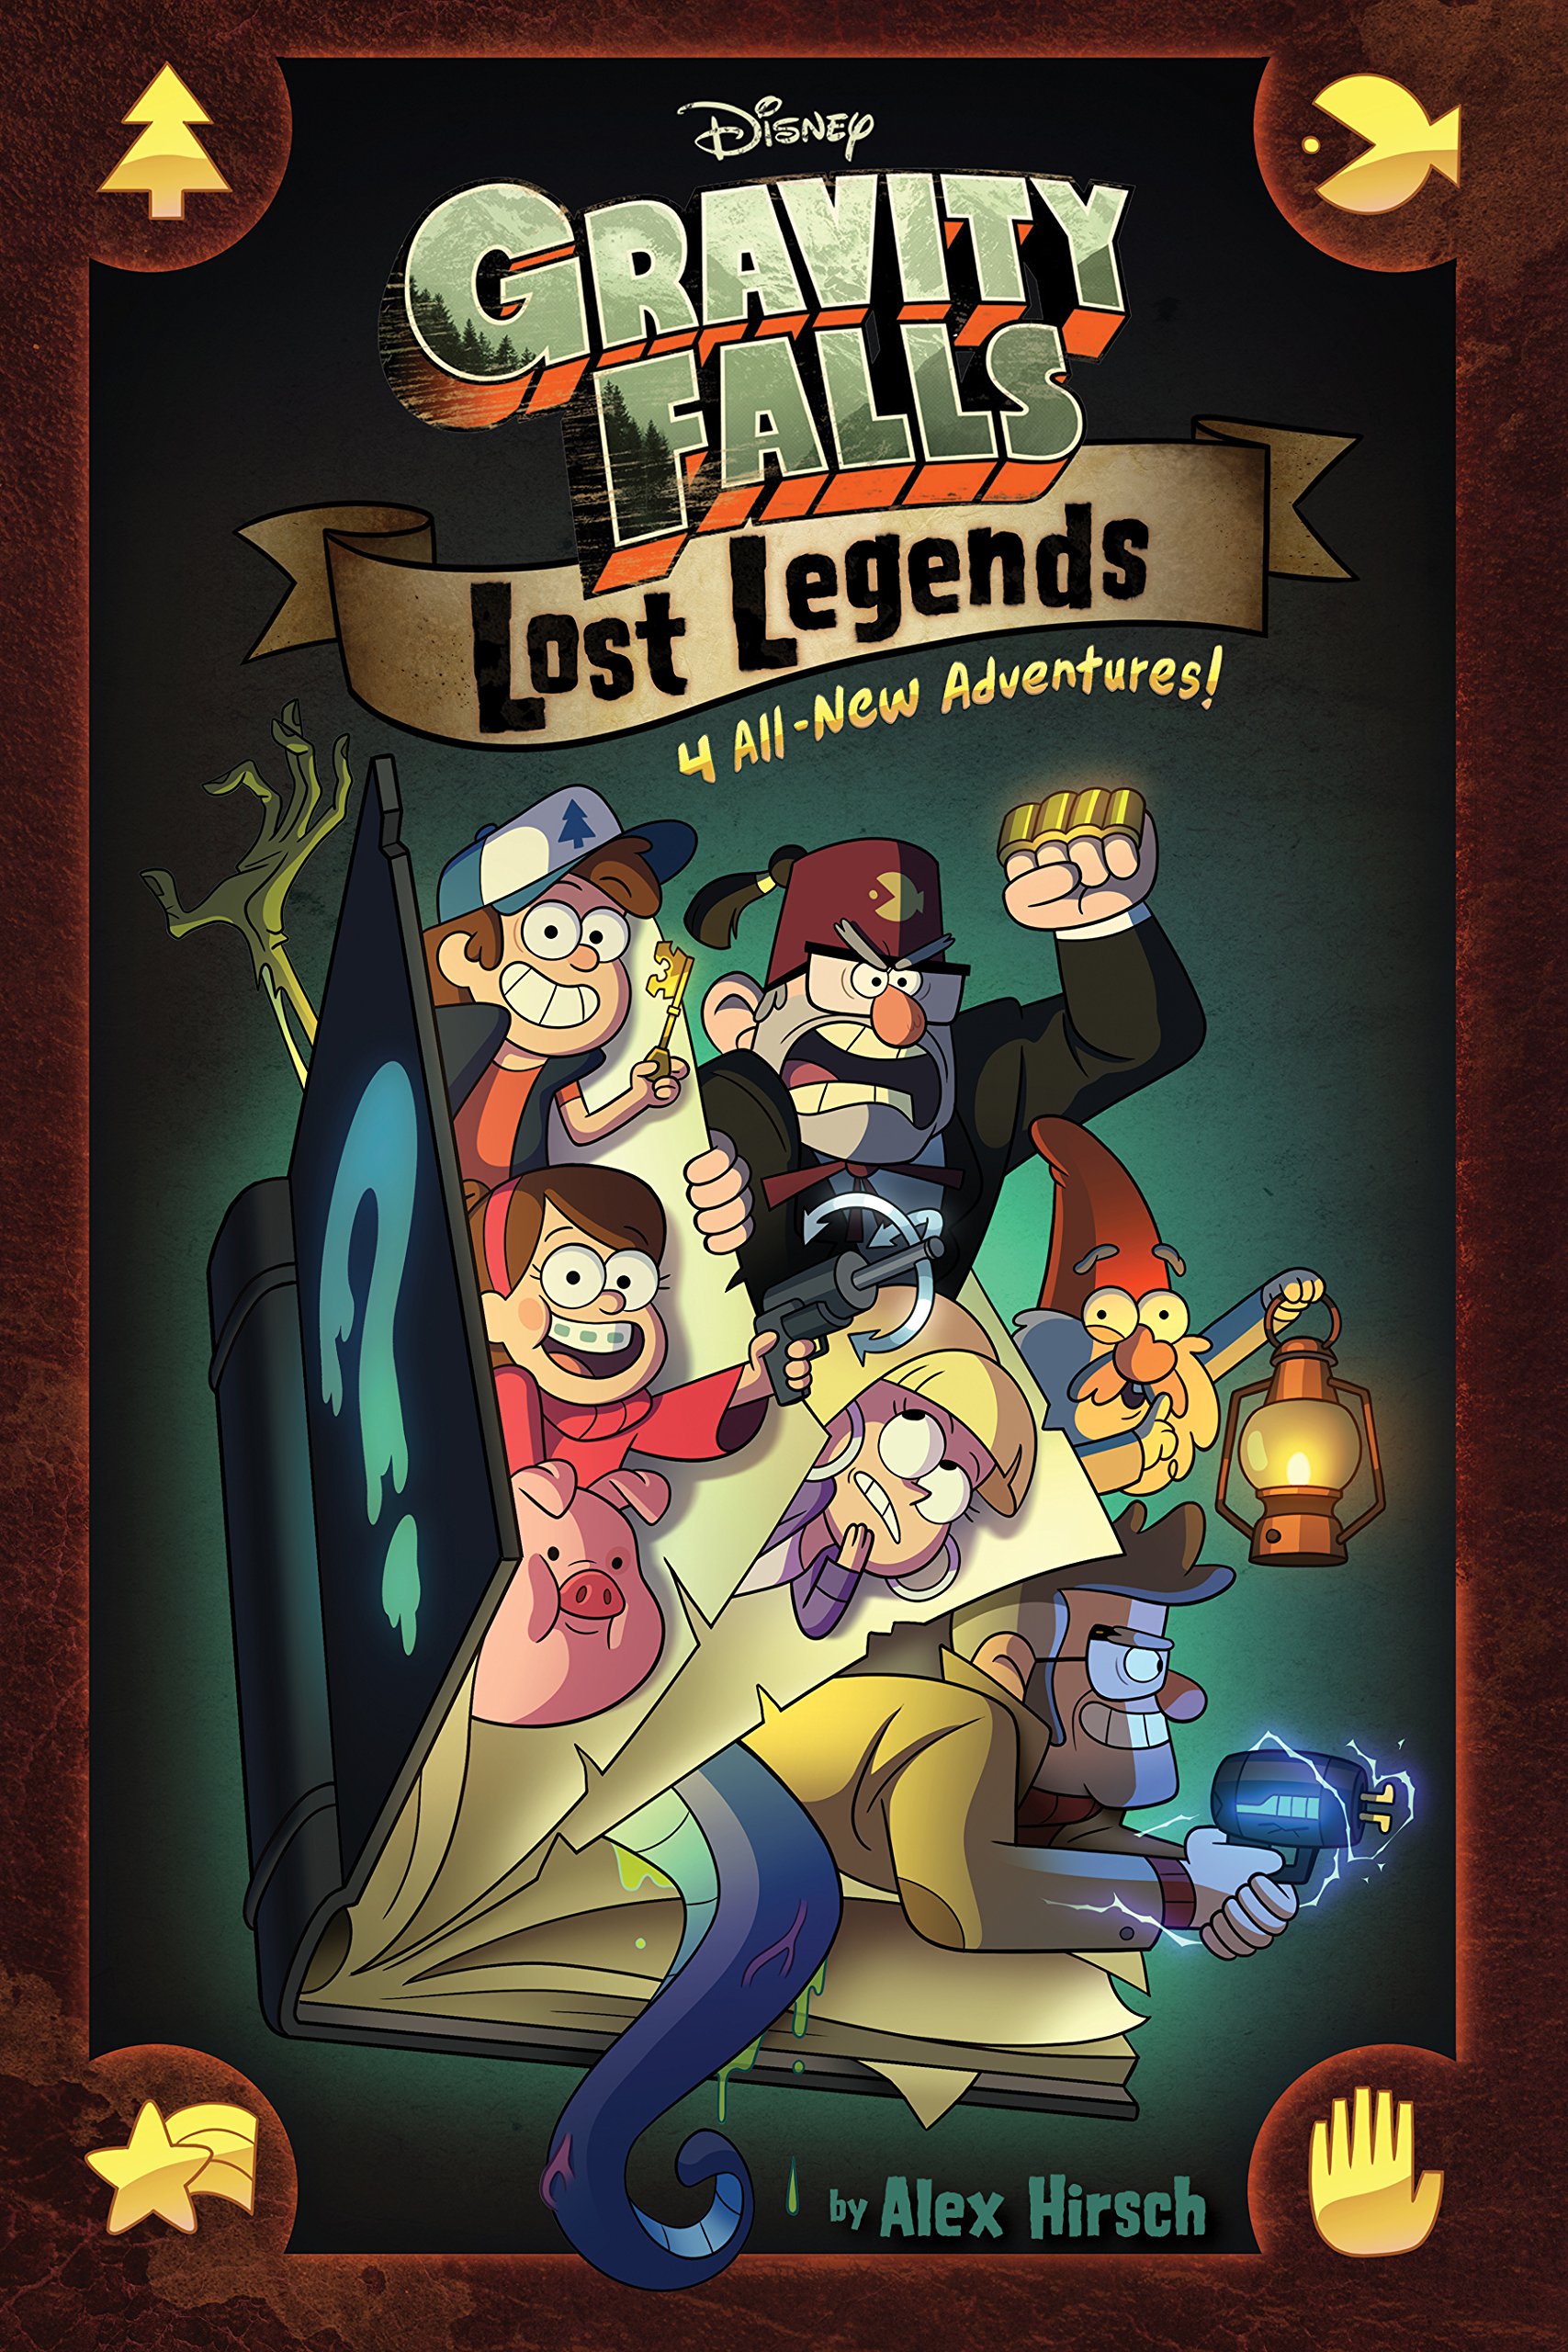 Chia sẻ truyện Gravity Falls: Lost Legends  $11.99 trên Amazon